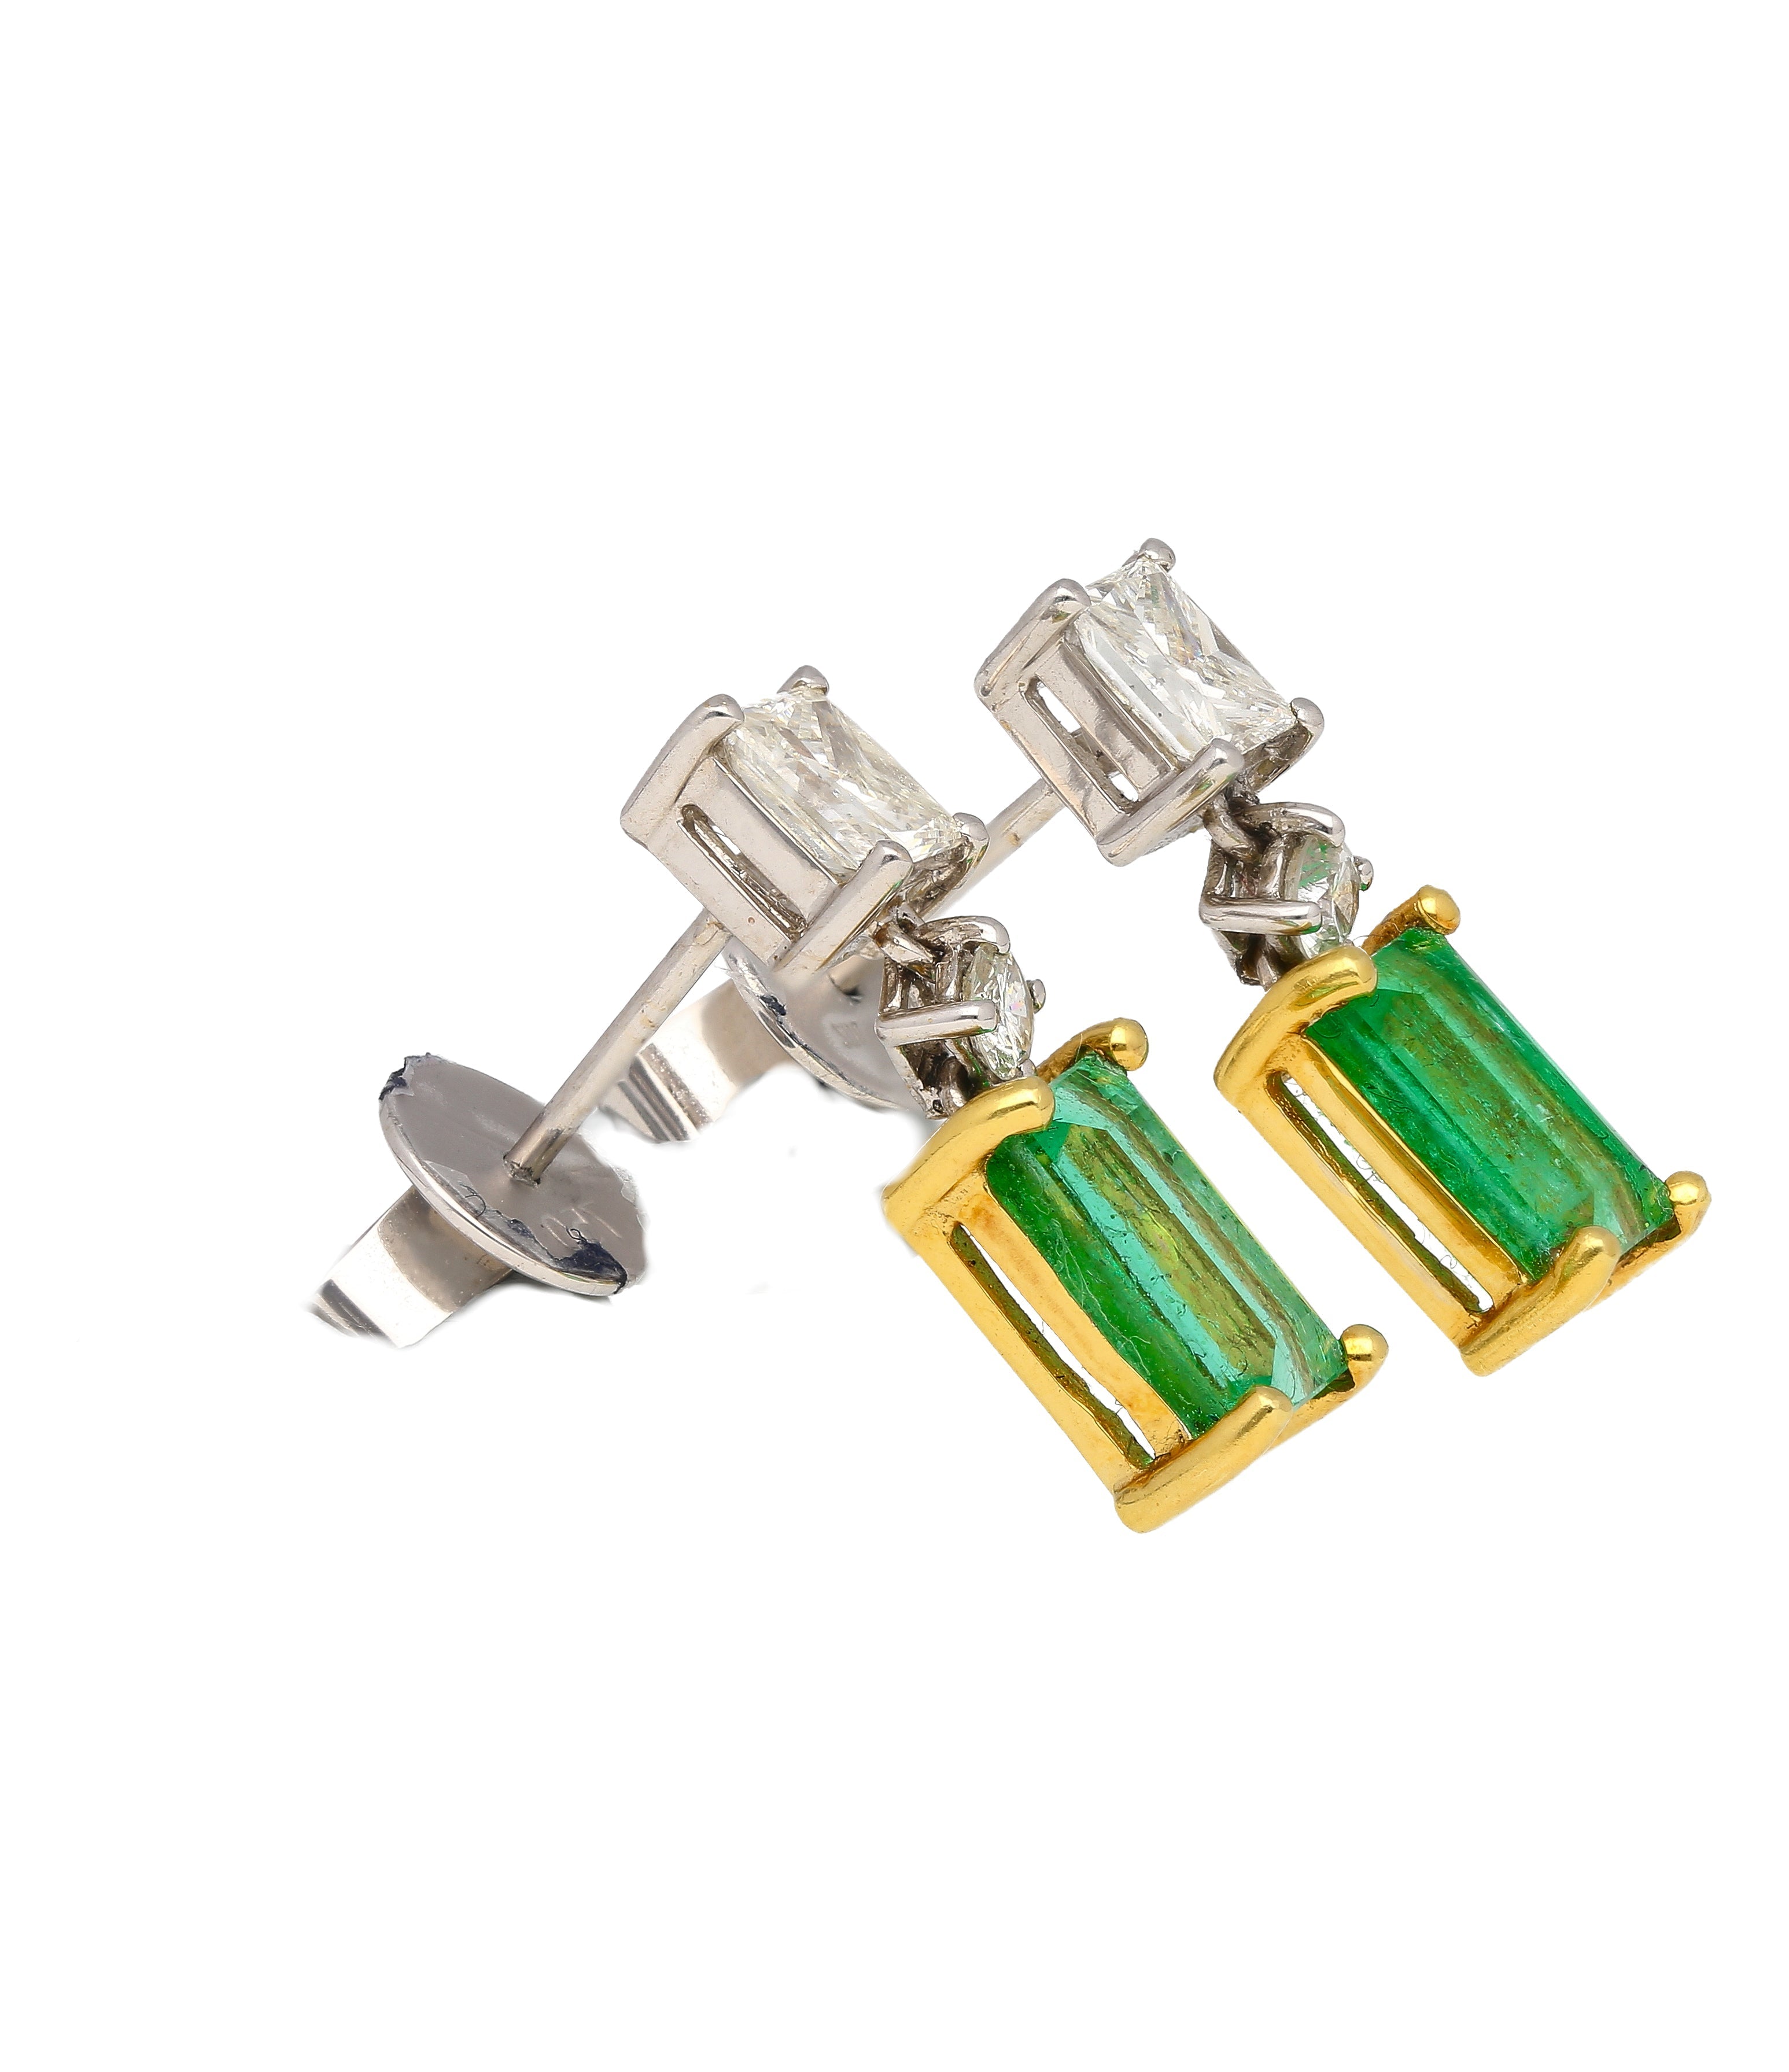 Natural-Elongated-Emerald-and-Diamond-Drop-Earrings-in-18K-Gold-Earrings-2_71bff91b-cdd3-423d-85ae-5ca1cc27ffc7.jpg